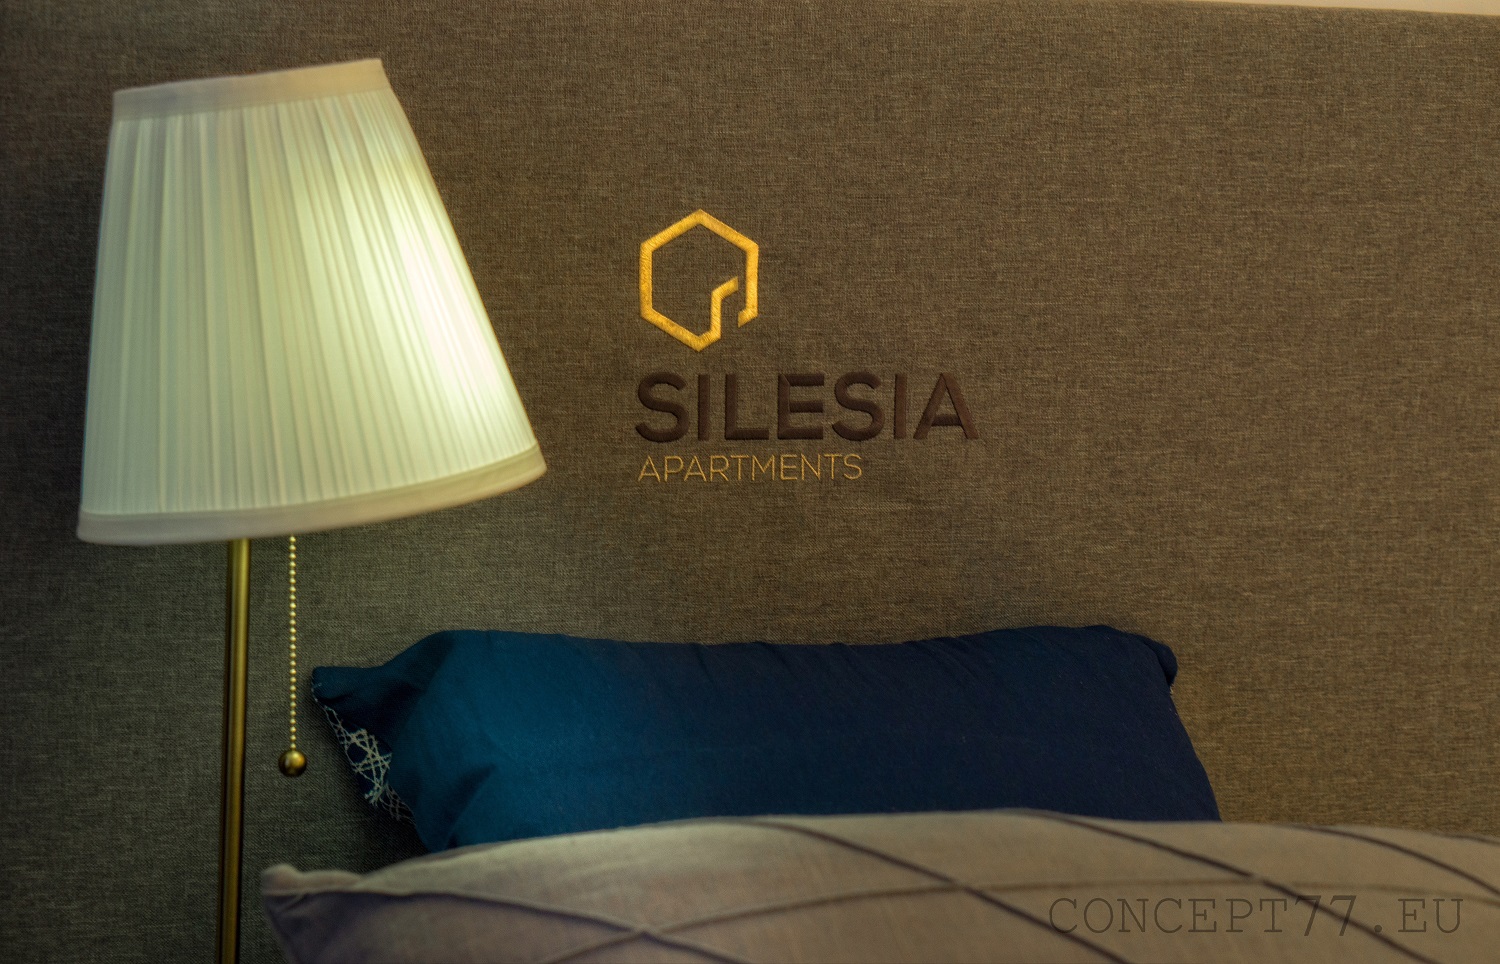 silesia apartments concept77 5